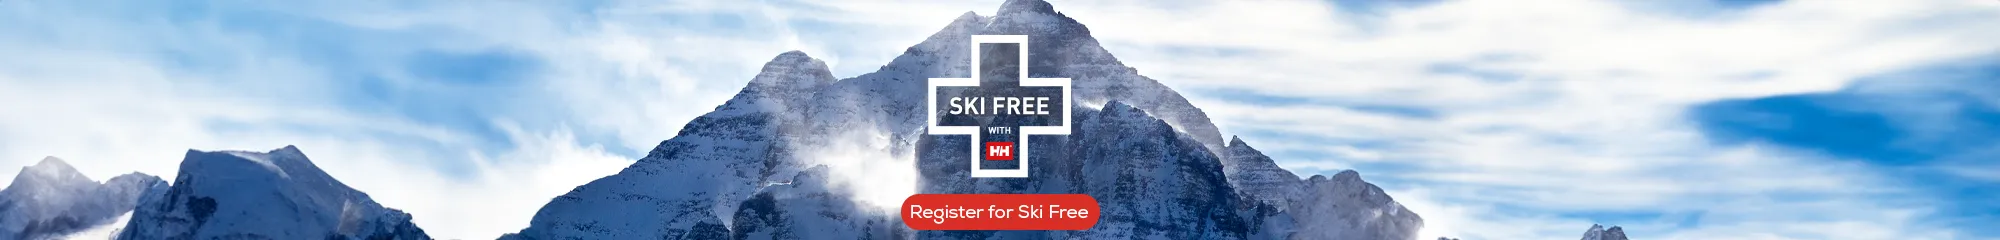 Ski Free with Helly Hansen